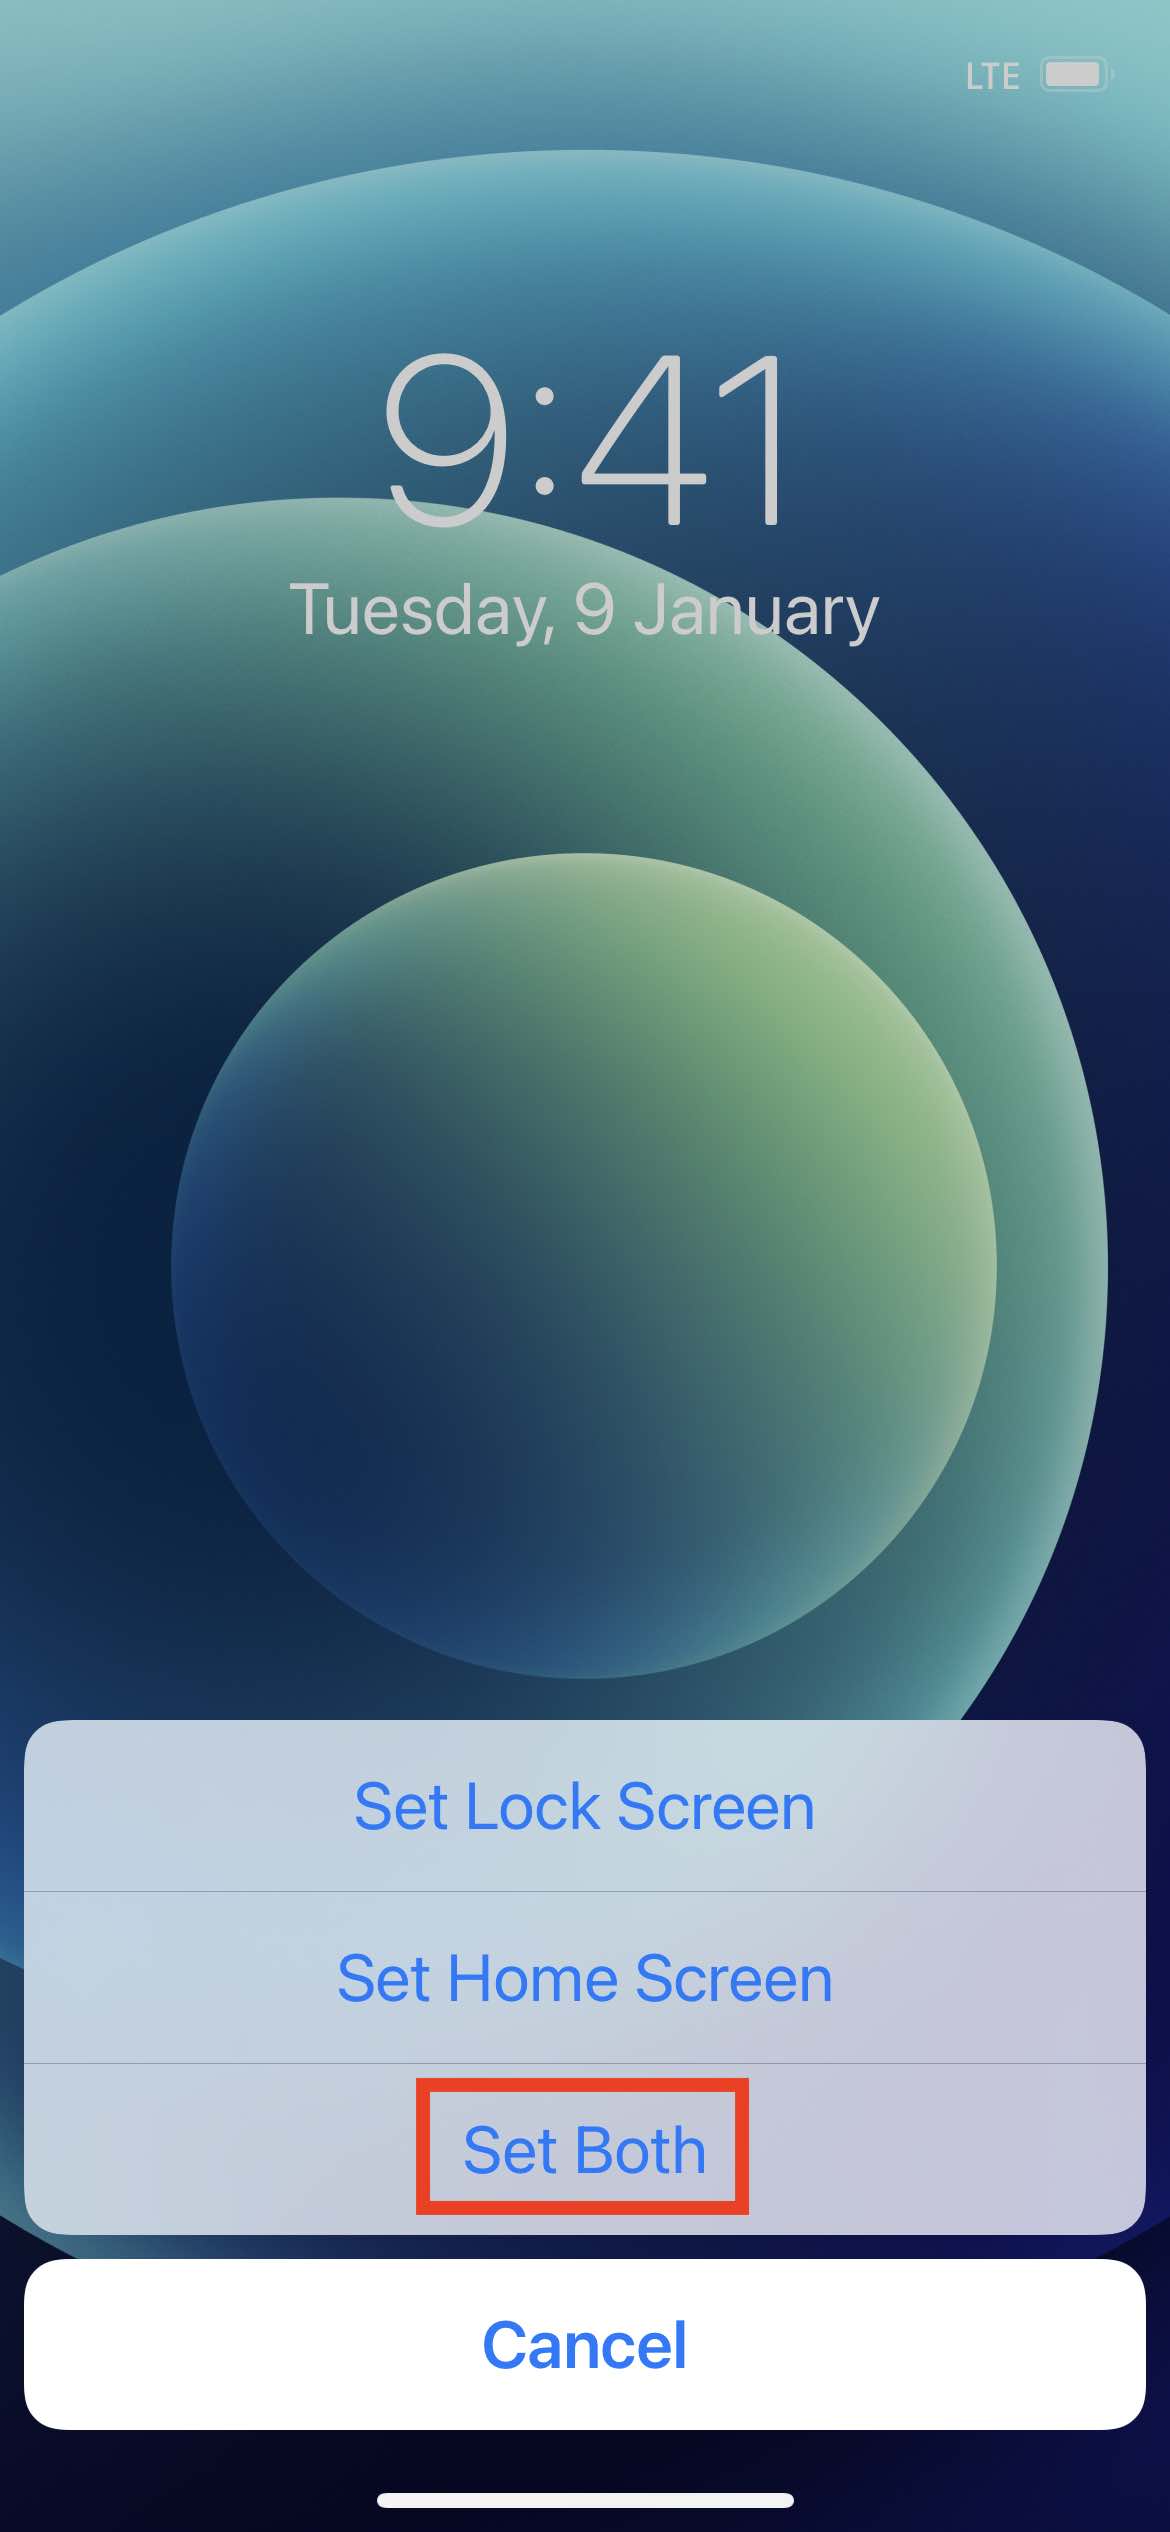 Set Wallaper as lock screen and Home screen